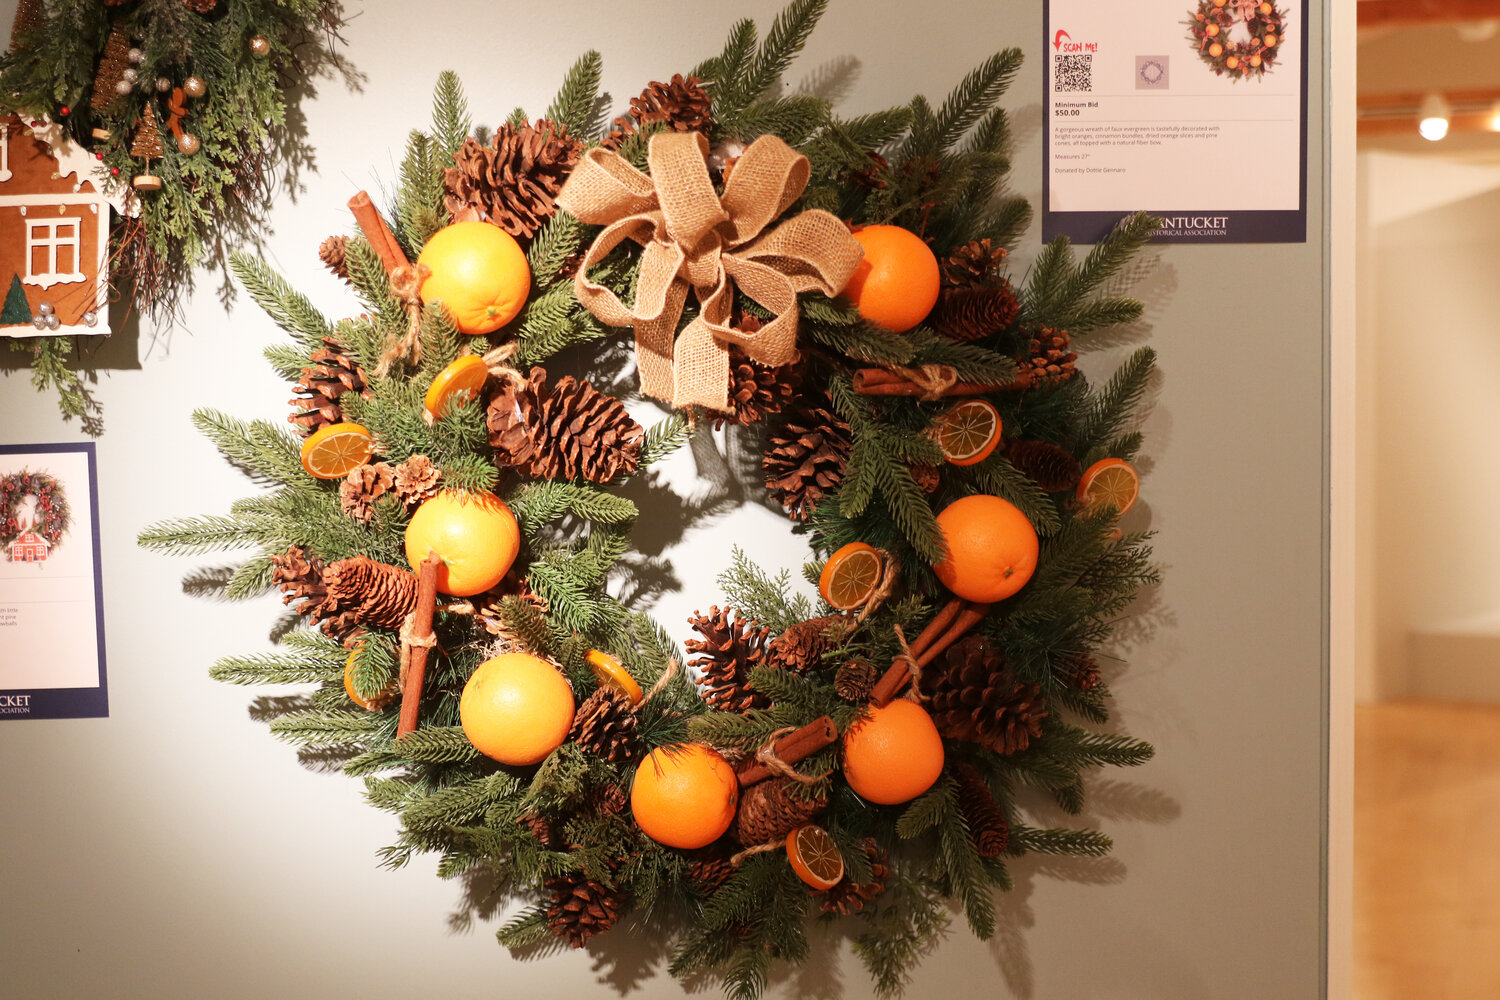 Dottie Gennaro’s wreath of pine boughs, pine cones, oranges and cinnamon sticks.